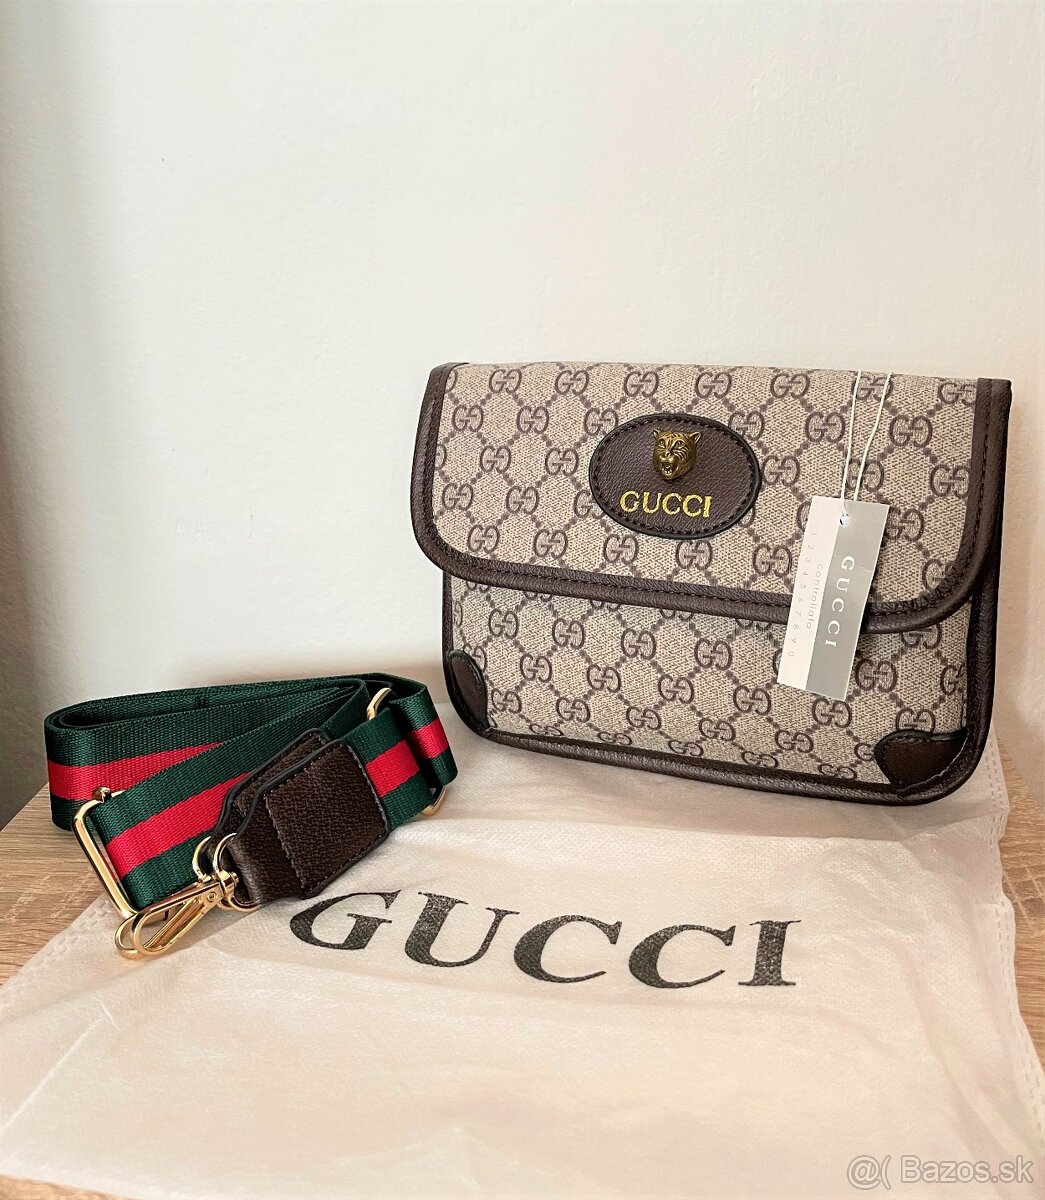 Gucci Neo Vintage crossbag/ľadvinka